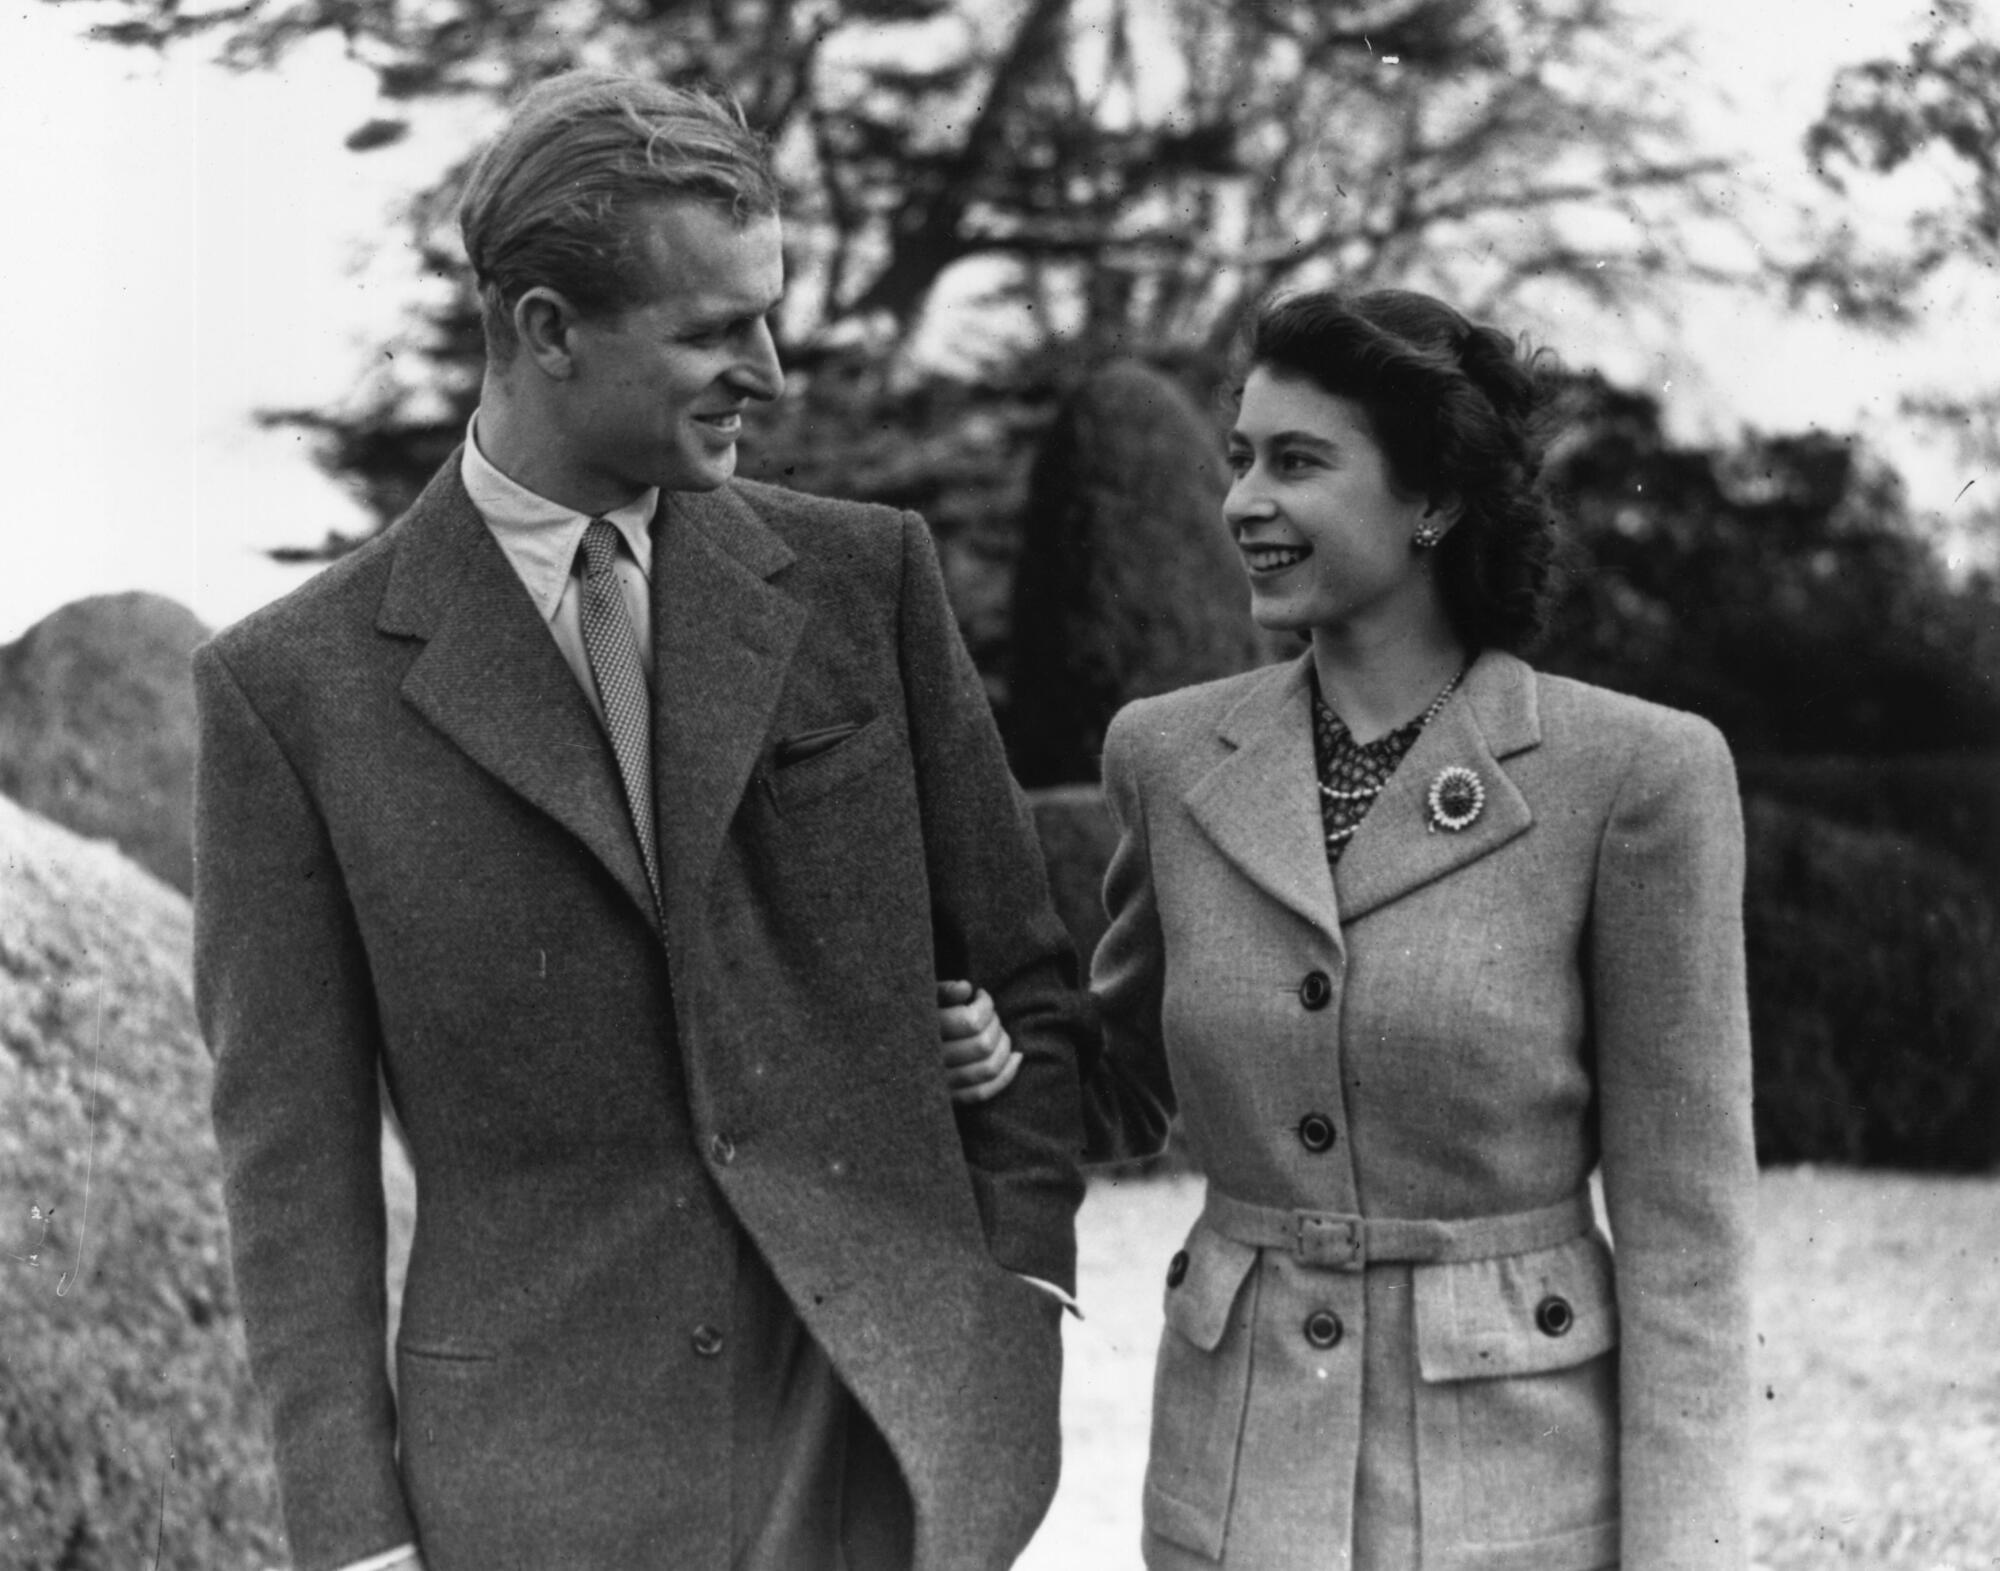 Princess Elizabeth and Prince Philip enjoying a walk during their honeymoon.